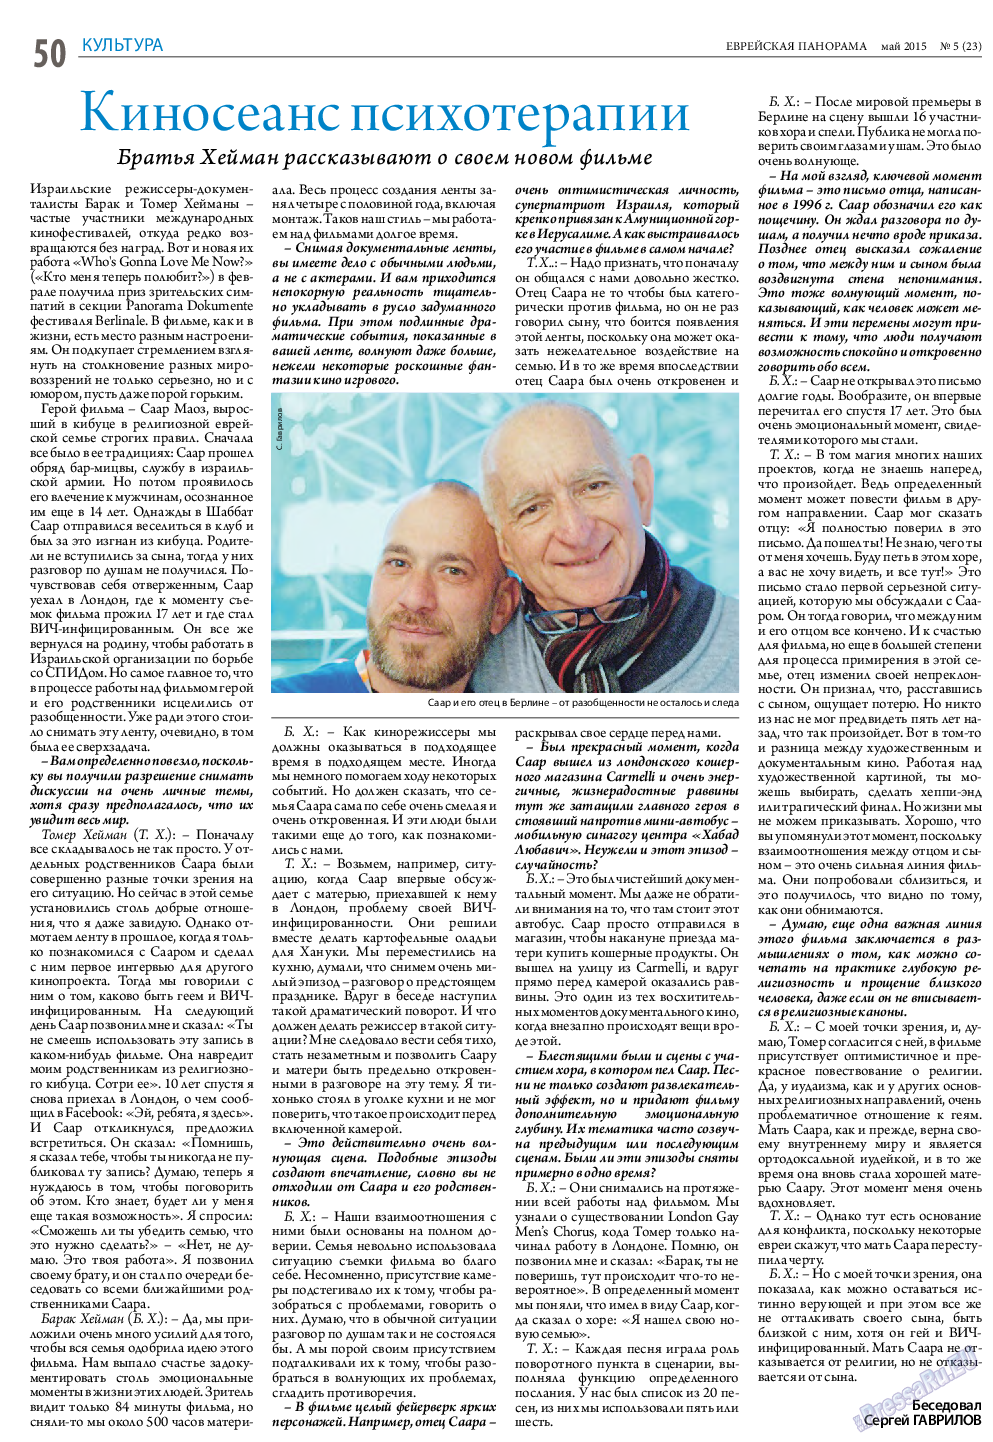 Еврейская панорама, газета. 2016 №5 стр.50